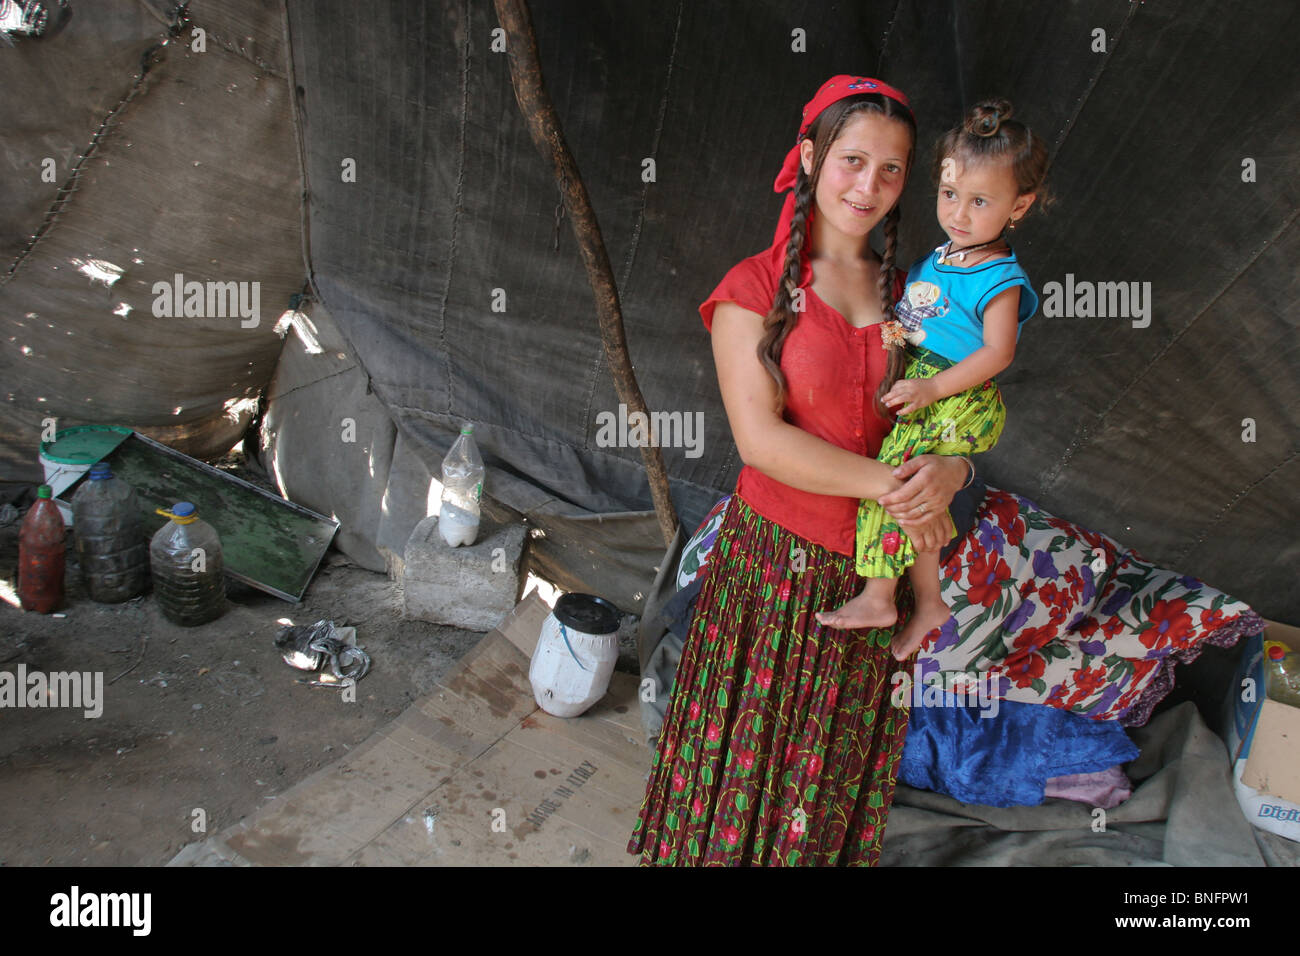 Romanian gypsies in their camp, near Bucharest, Romania Stock Photo